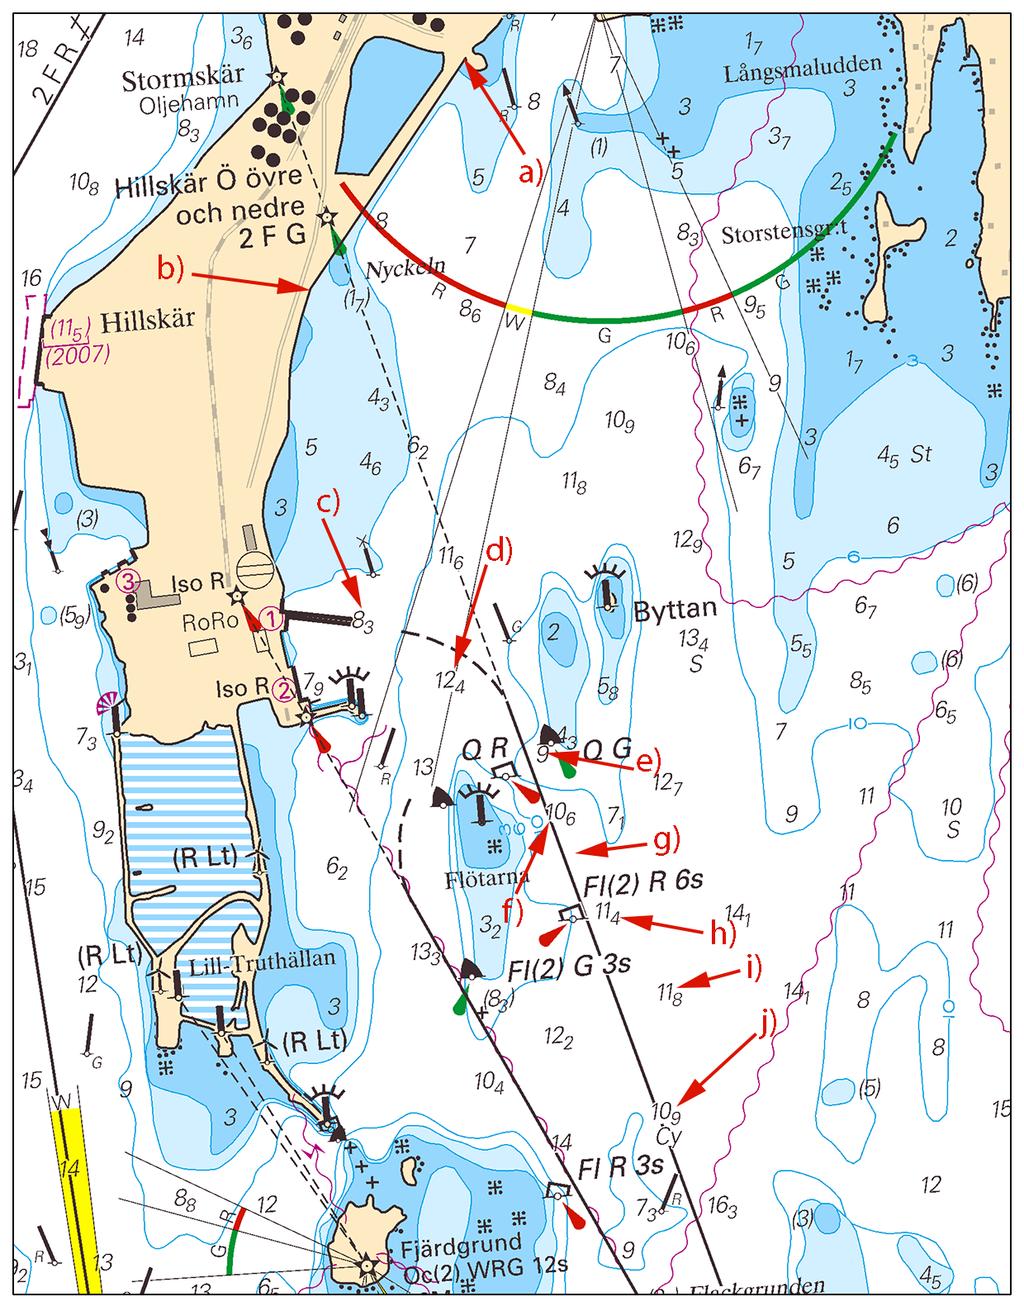 2015-03-12 5 No 537 Hillskär Sjöfartsverket, Norrköping. Publ. 11 mars 2015 * 10213 Chart: 512, 5121 Sweden. The Quark. Port of Holmsund. Dynan. Light sectors now reliable.